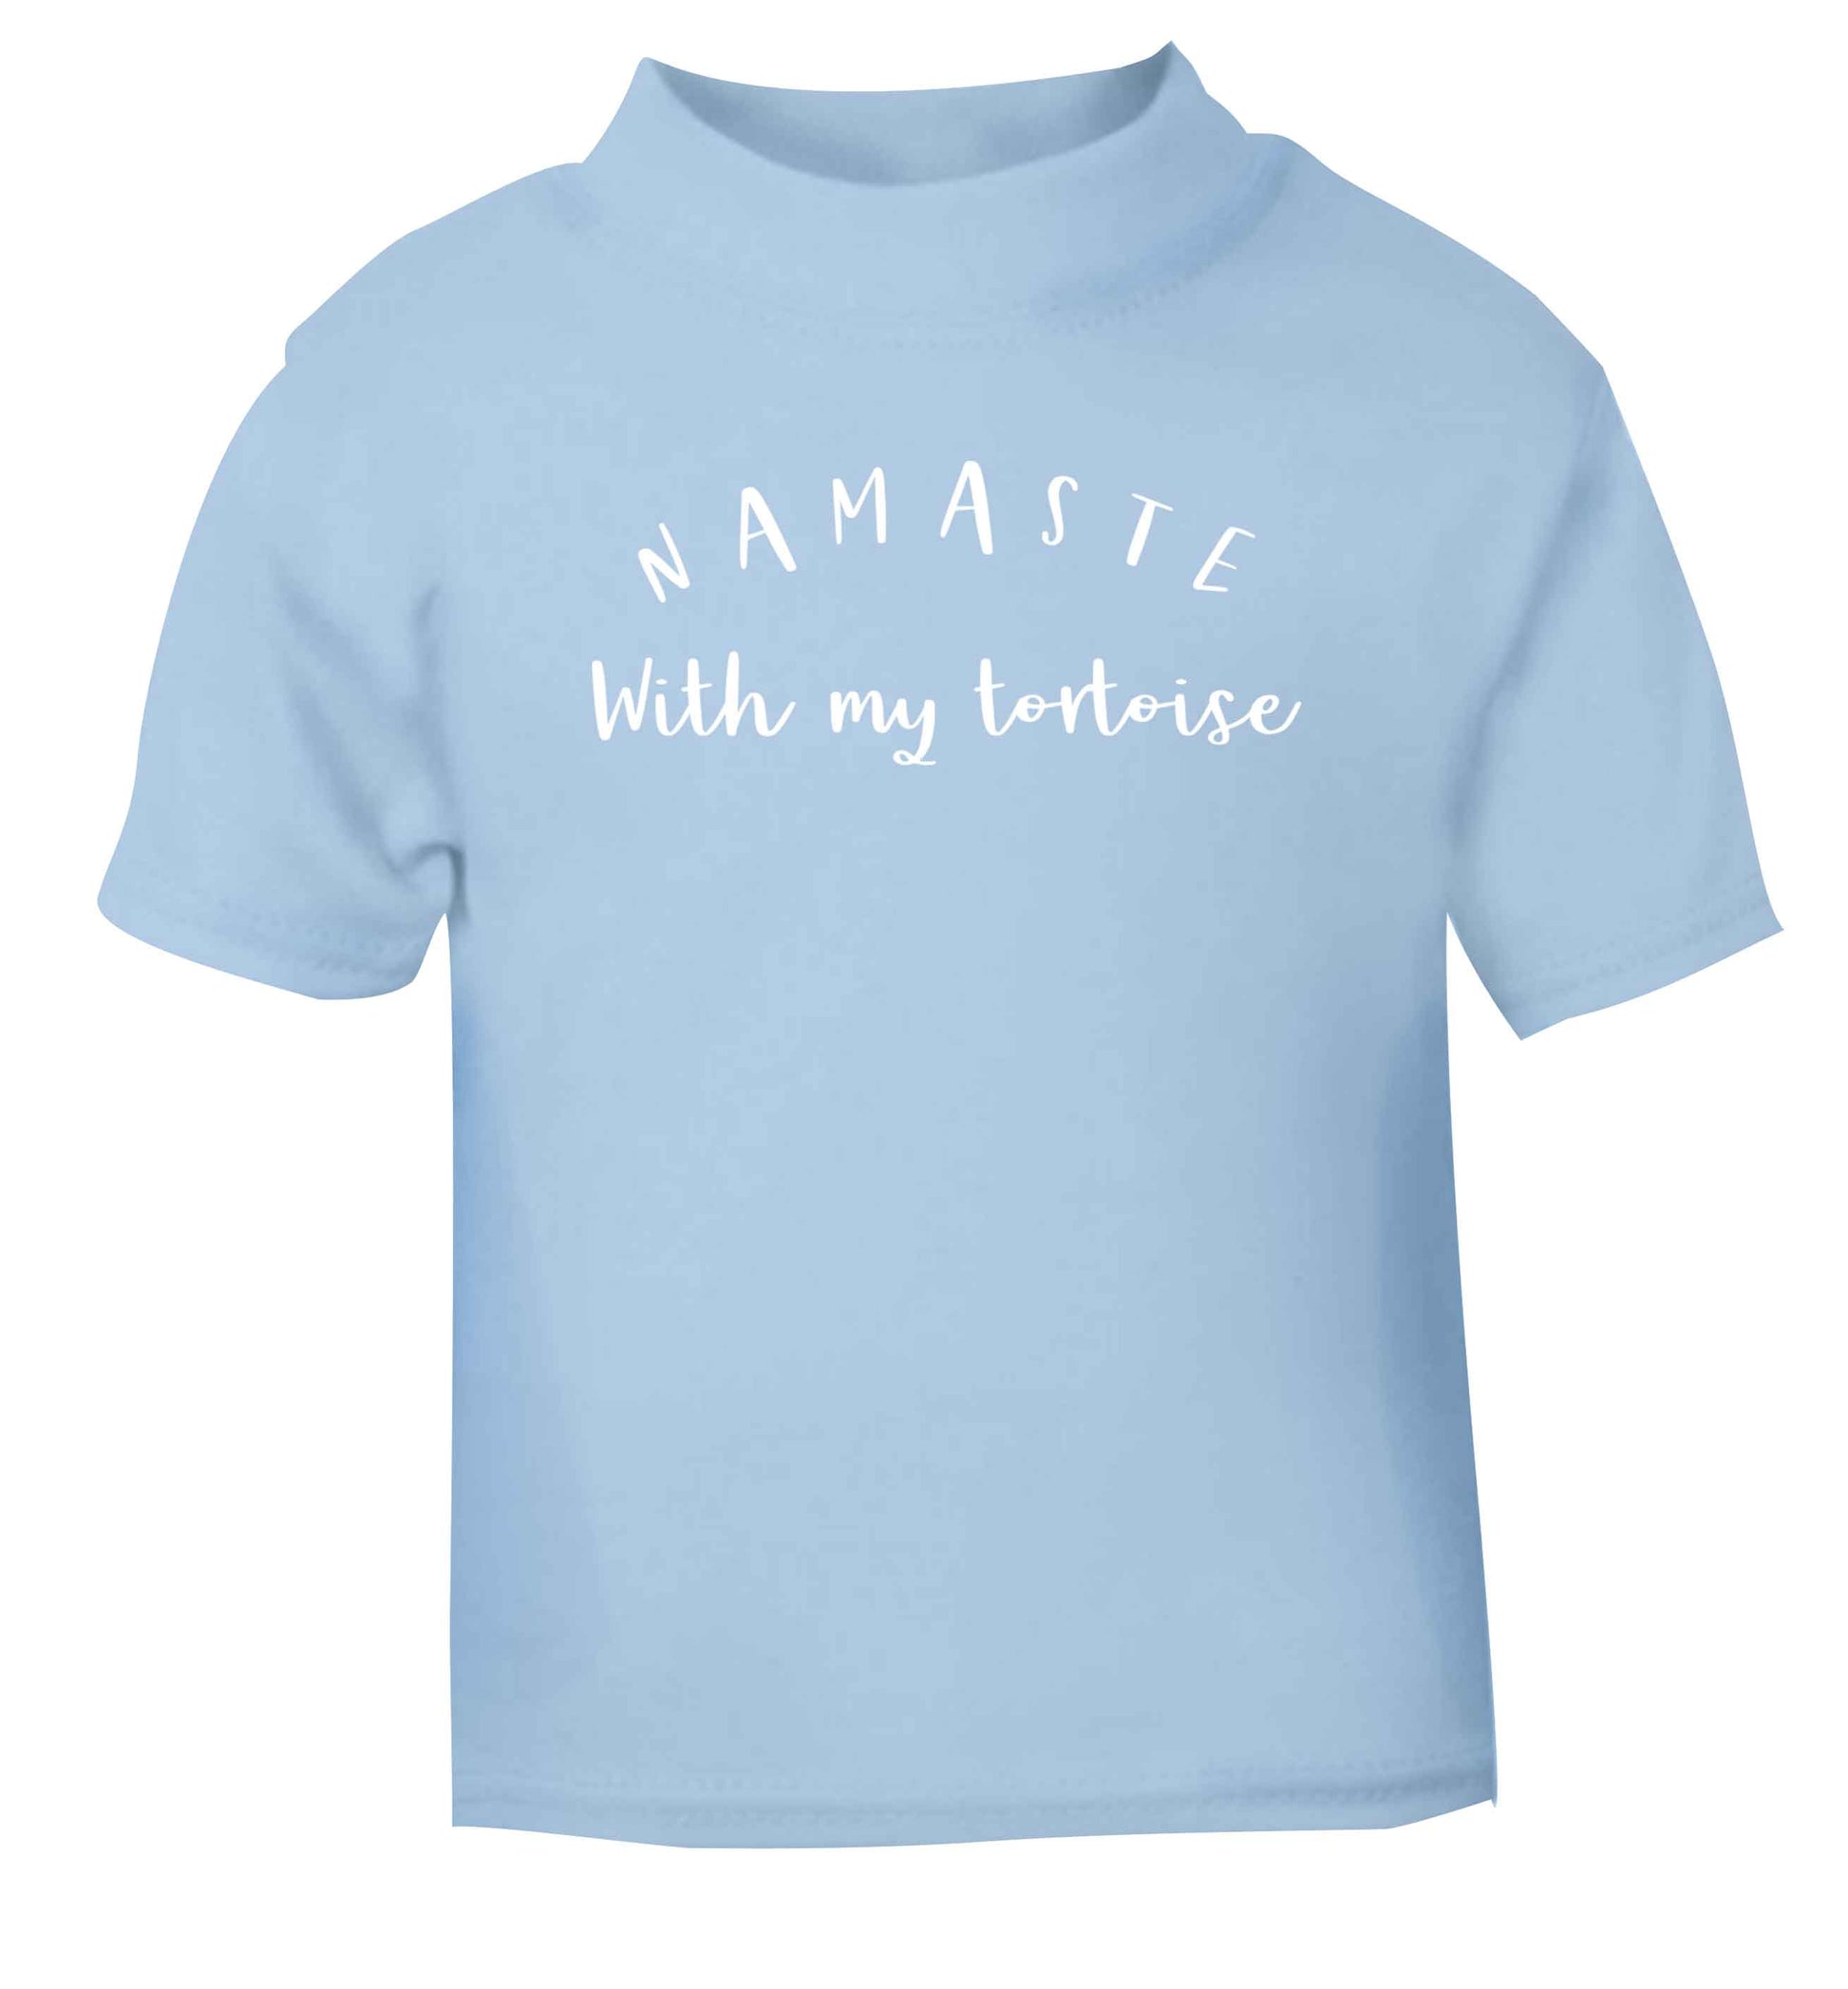 Namaste with my tortoise light blue Baby Toddler Tshirt 2 Years